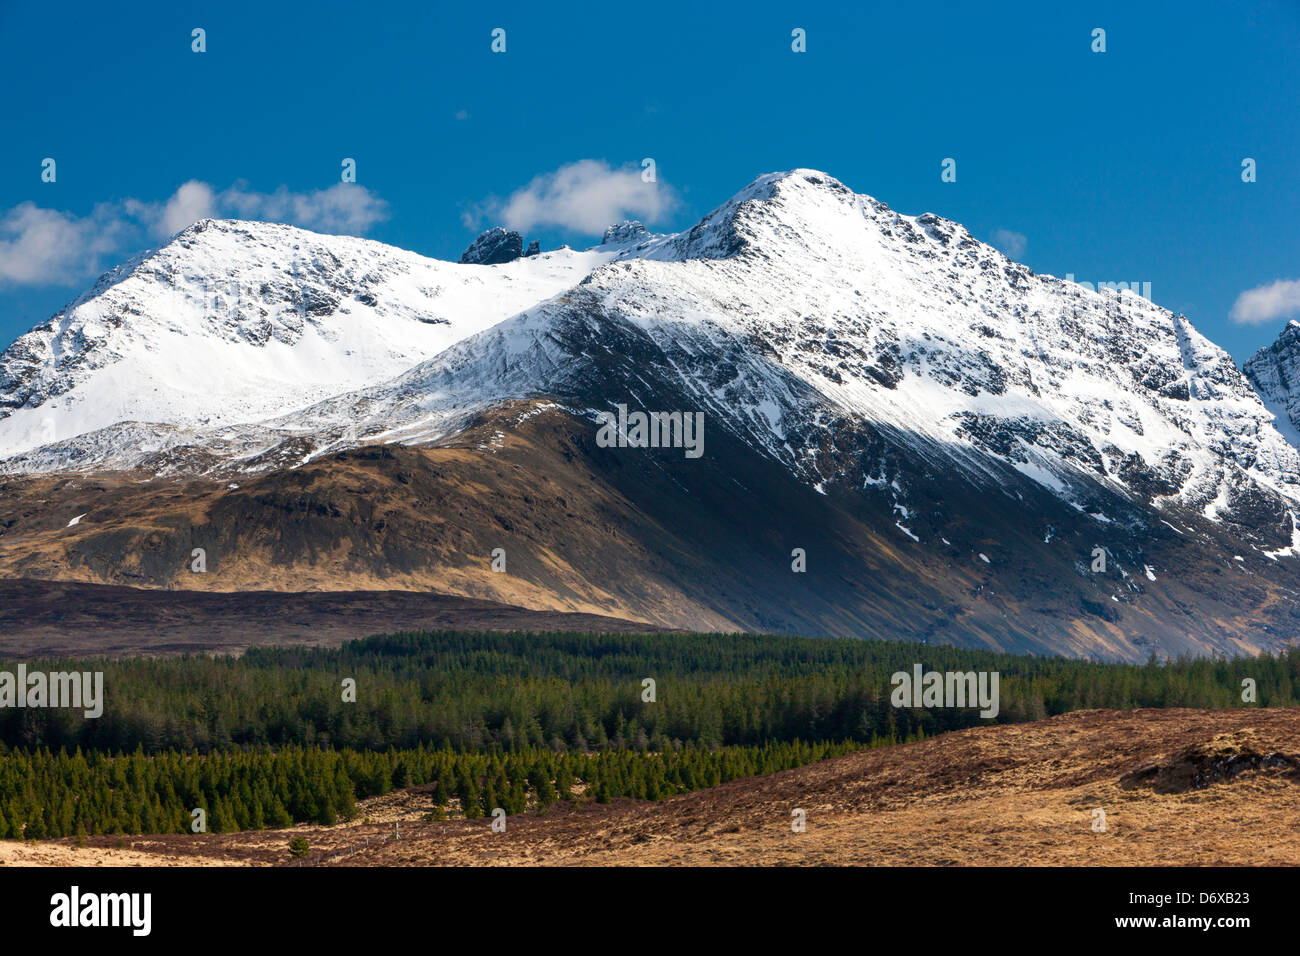 A view towards Sgurr nan Gillean, Black Cuillins range, Isle of Skye, Inner Hebrides, Scotland, United Kingdom, Europe. Stock Photo